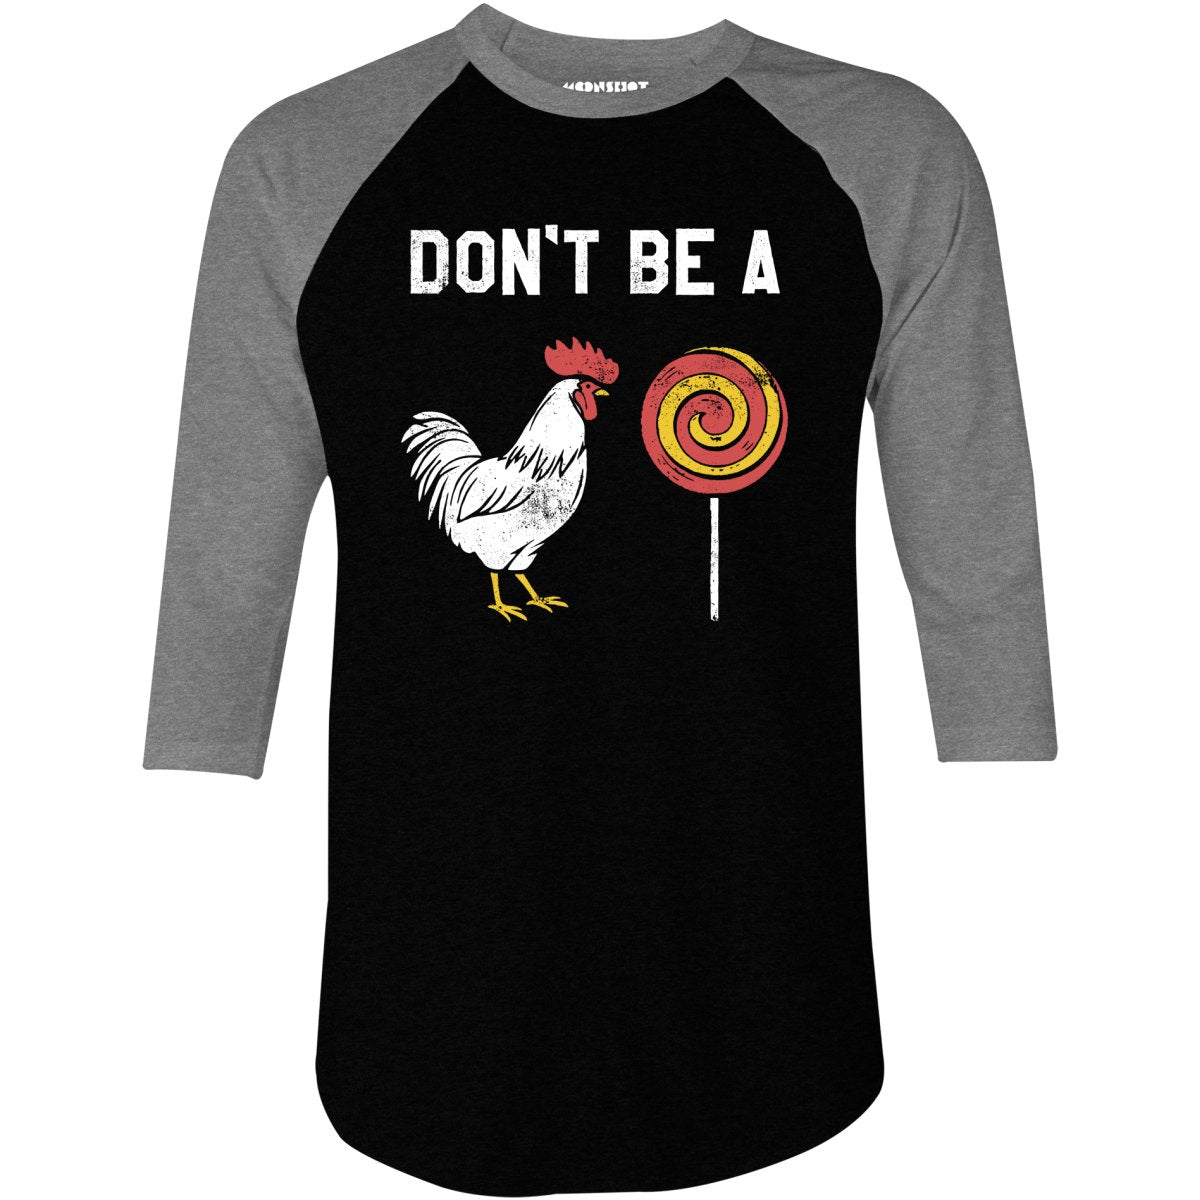 Don't Be a Cocksucker - 3/4 Sleeve Raglan T-Shirt